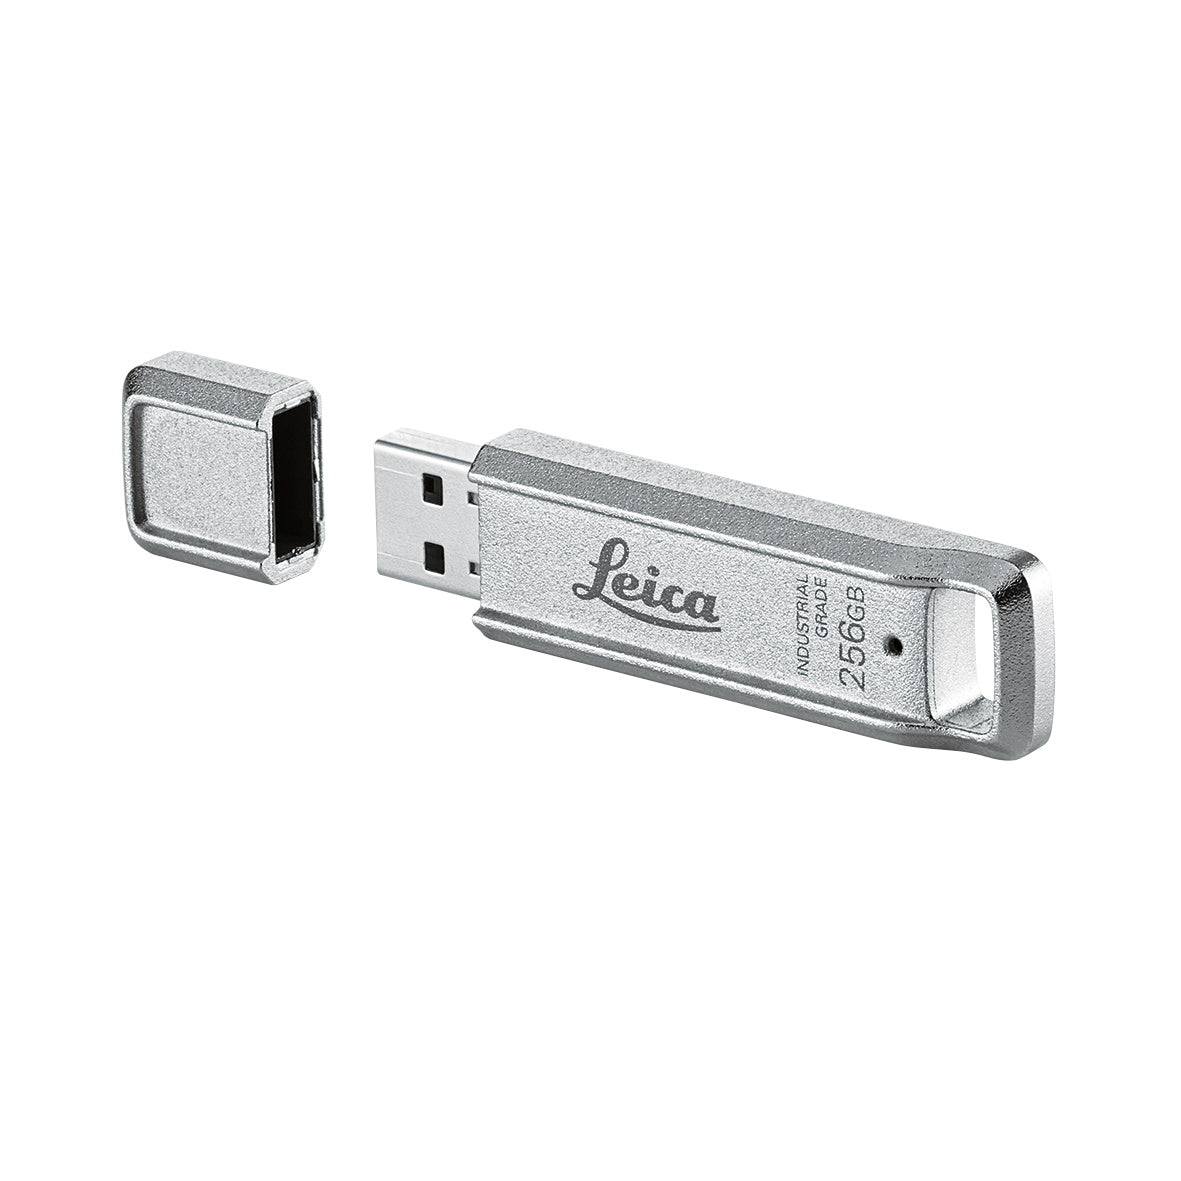 Leica RTC USB Stick